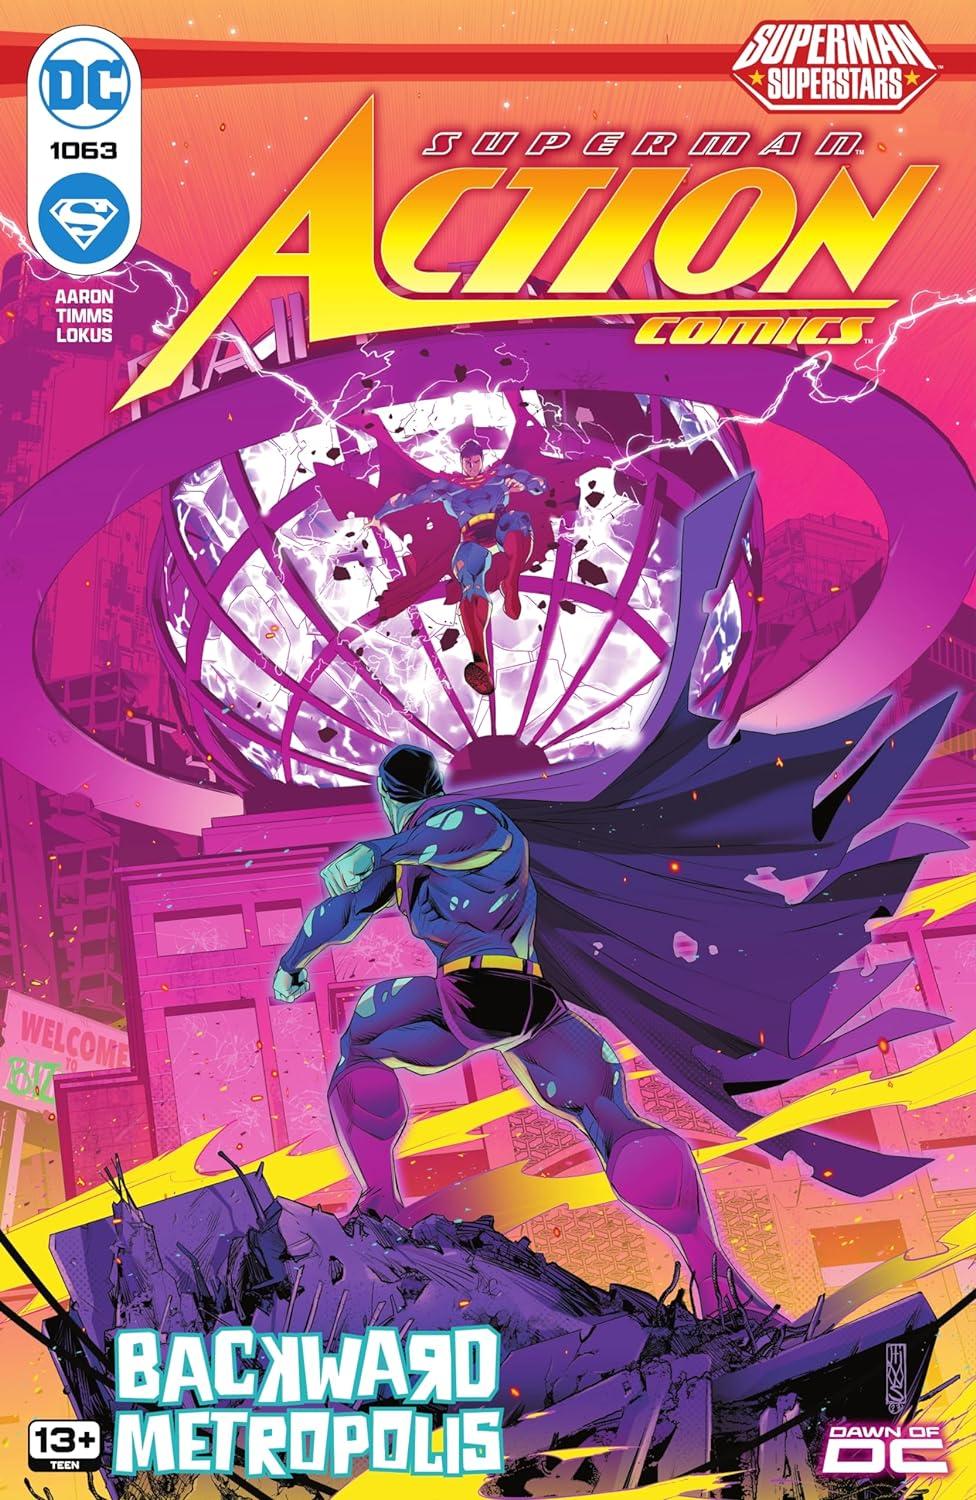 Action Comics #1063 cover art